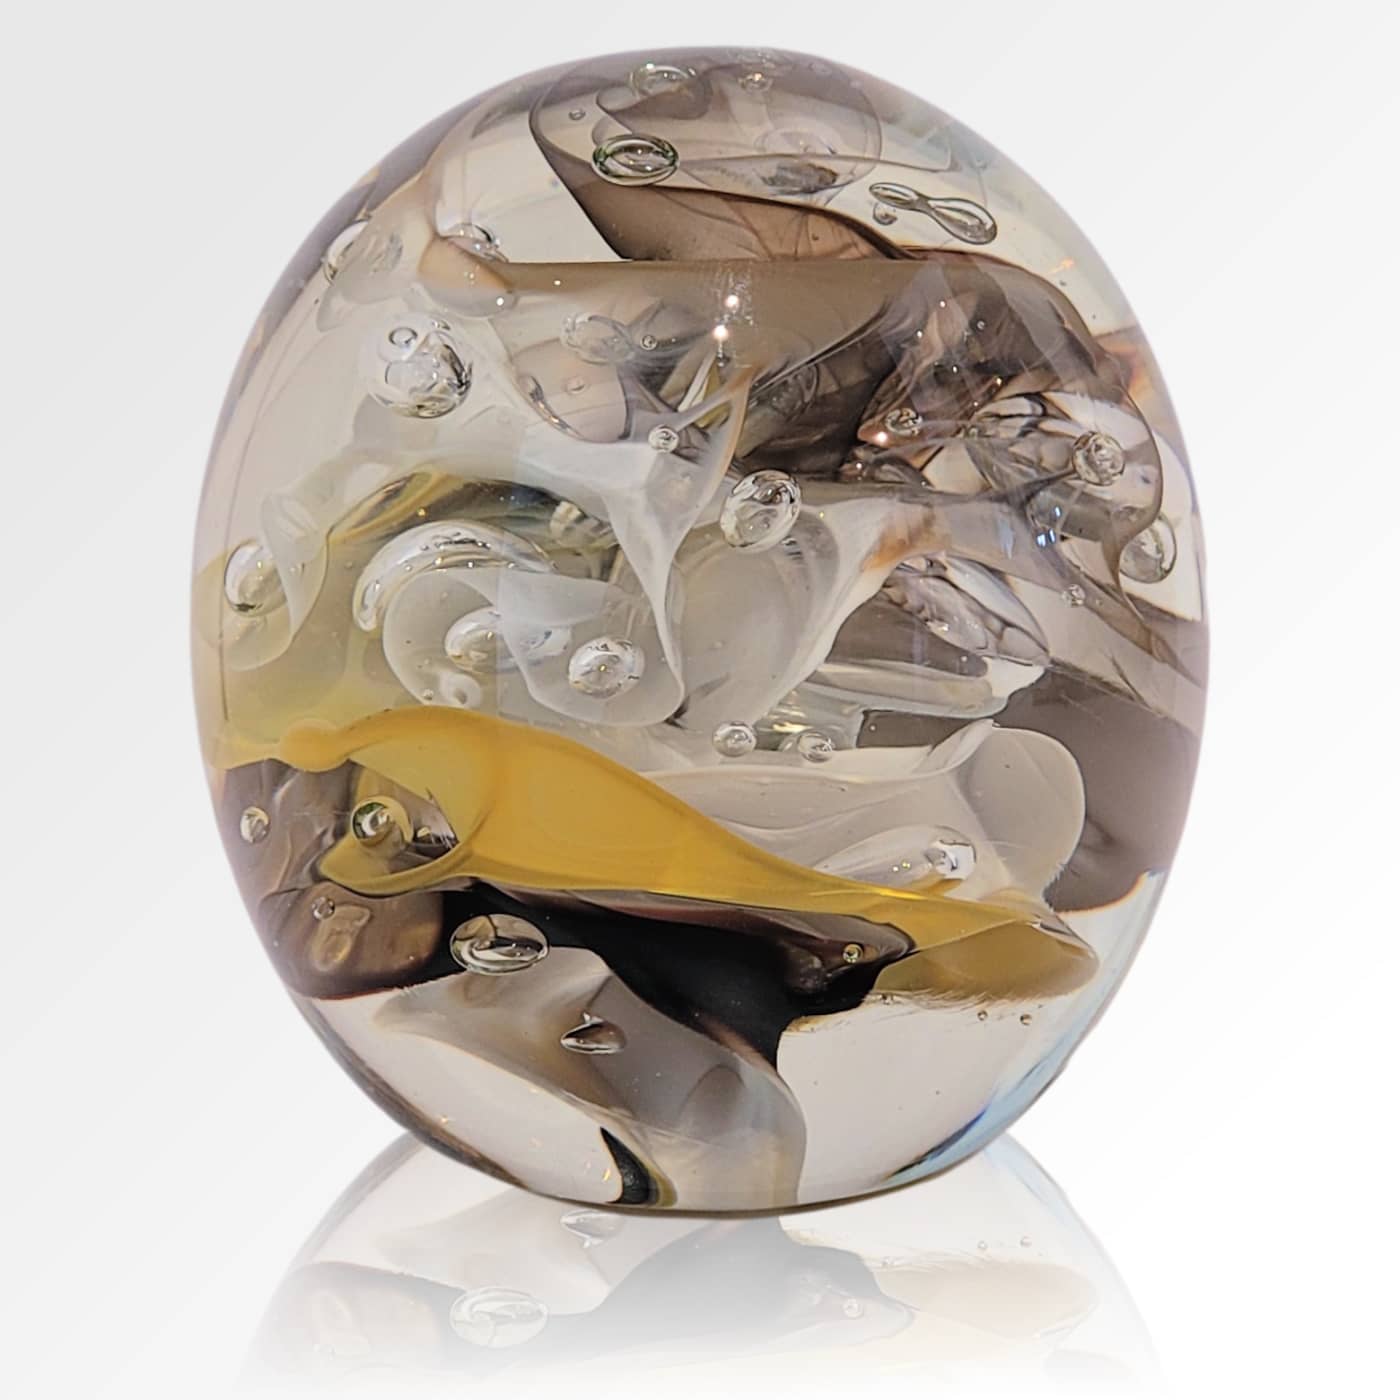 Peninsula-Based Australian Glass Artist Roberta Easton ~ 'Bubbly Sphere, Sand' - Curate Art & Design Gallery Sorrento Mornington Peninsula Melbourne